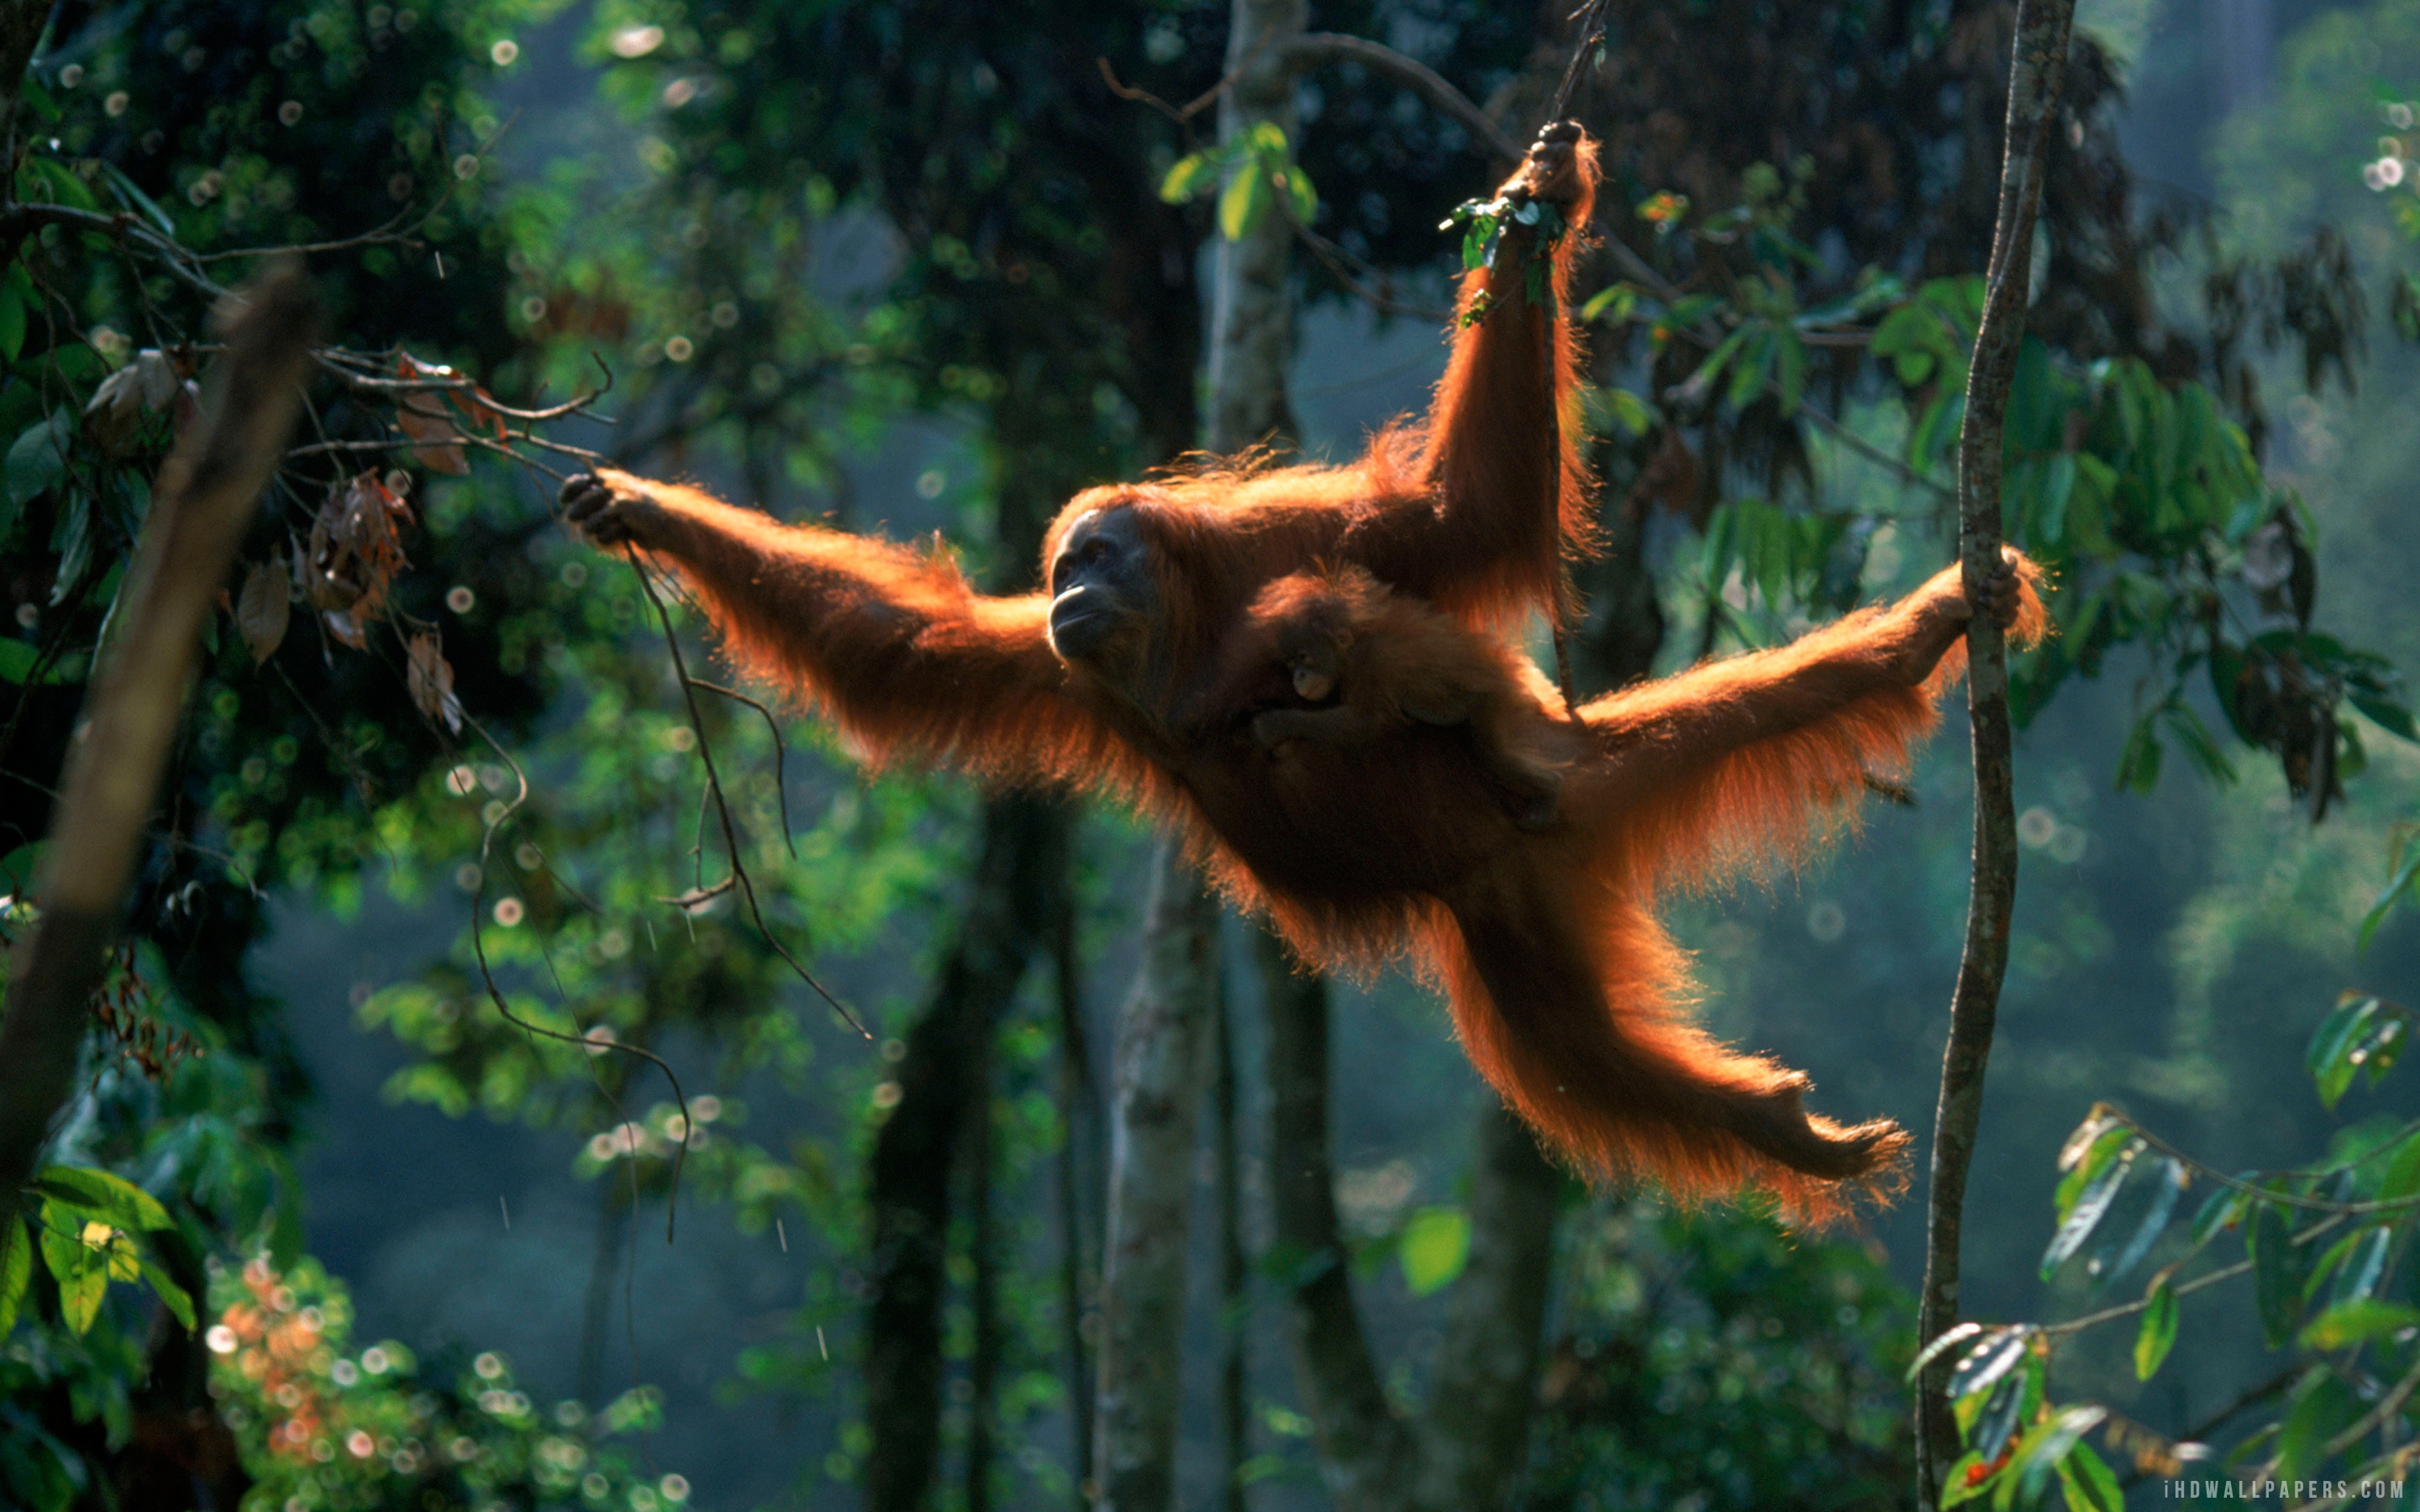 Download wallpaper for 240x320 resolution | Sumatran orangutan